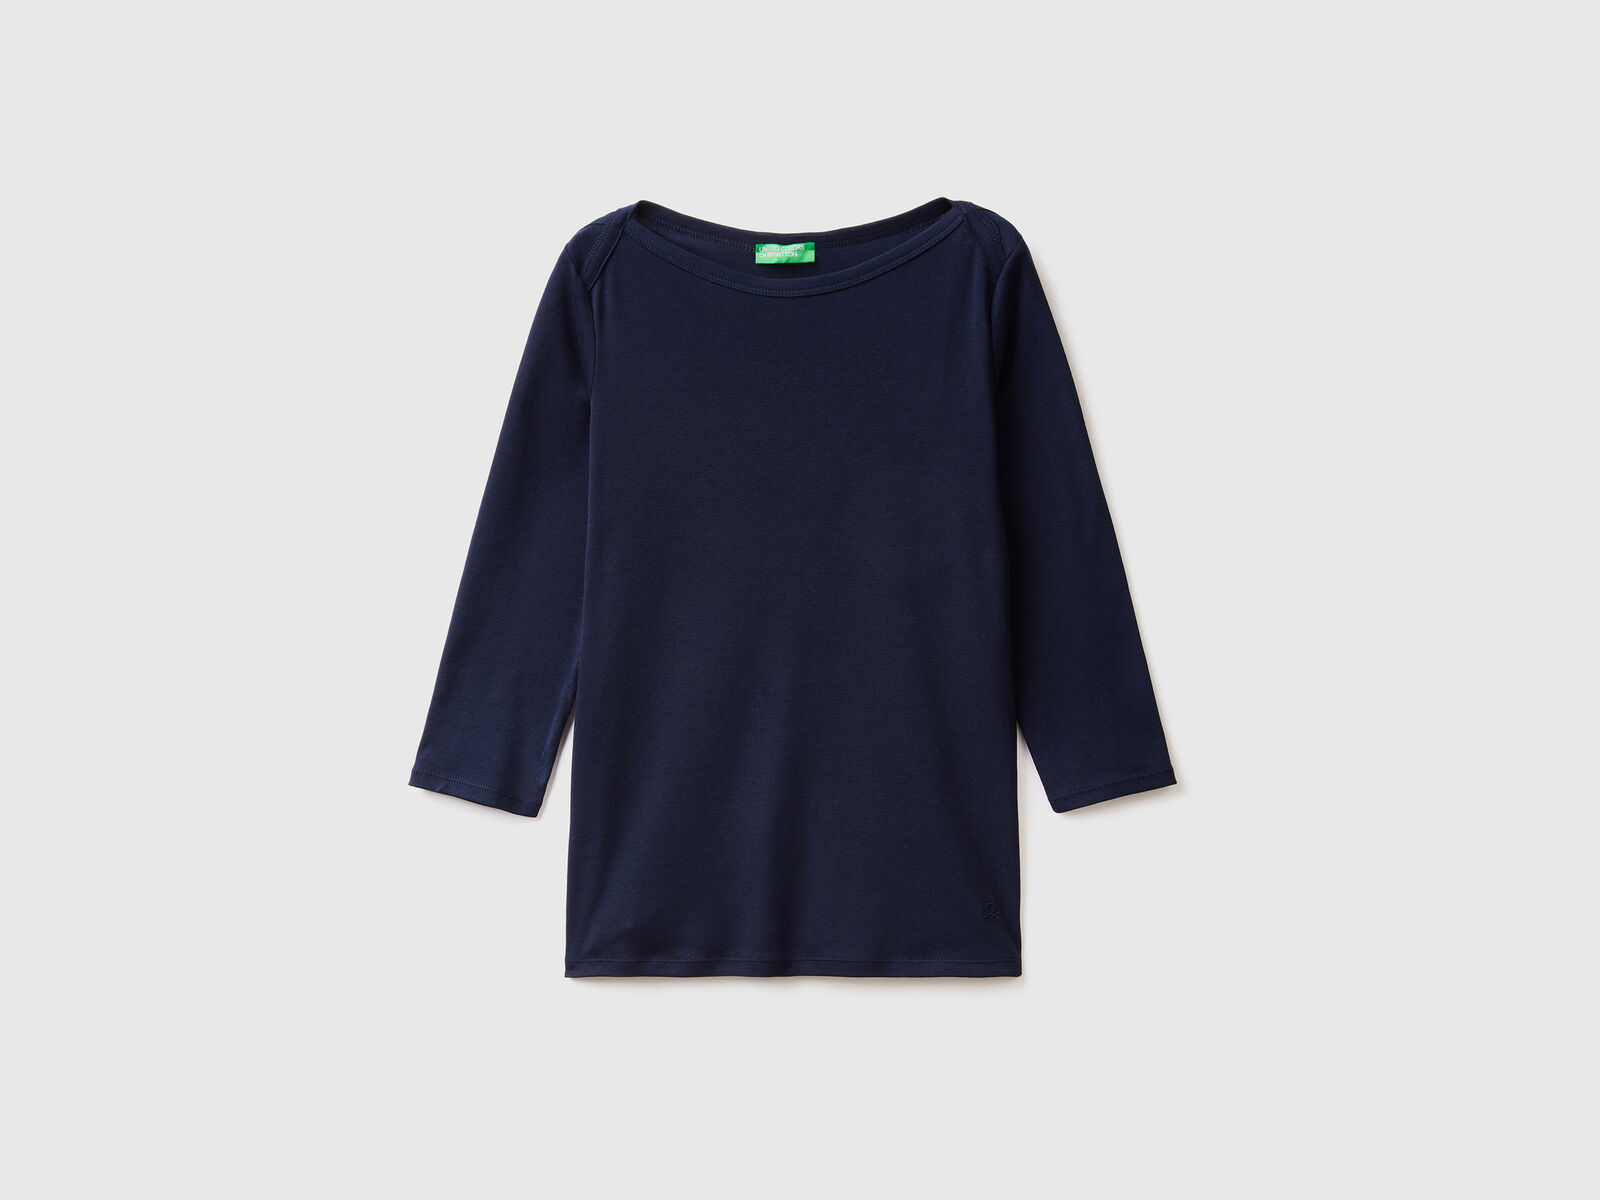 Bexy Etlana - 100% Cotton V-Neck Navy Blue Lace T-Shirt